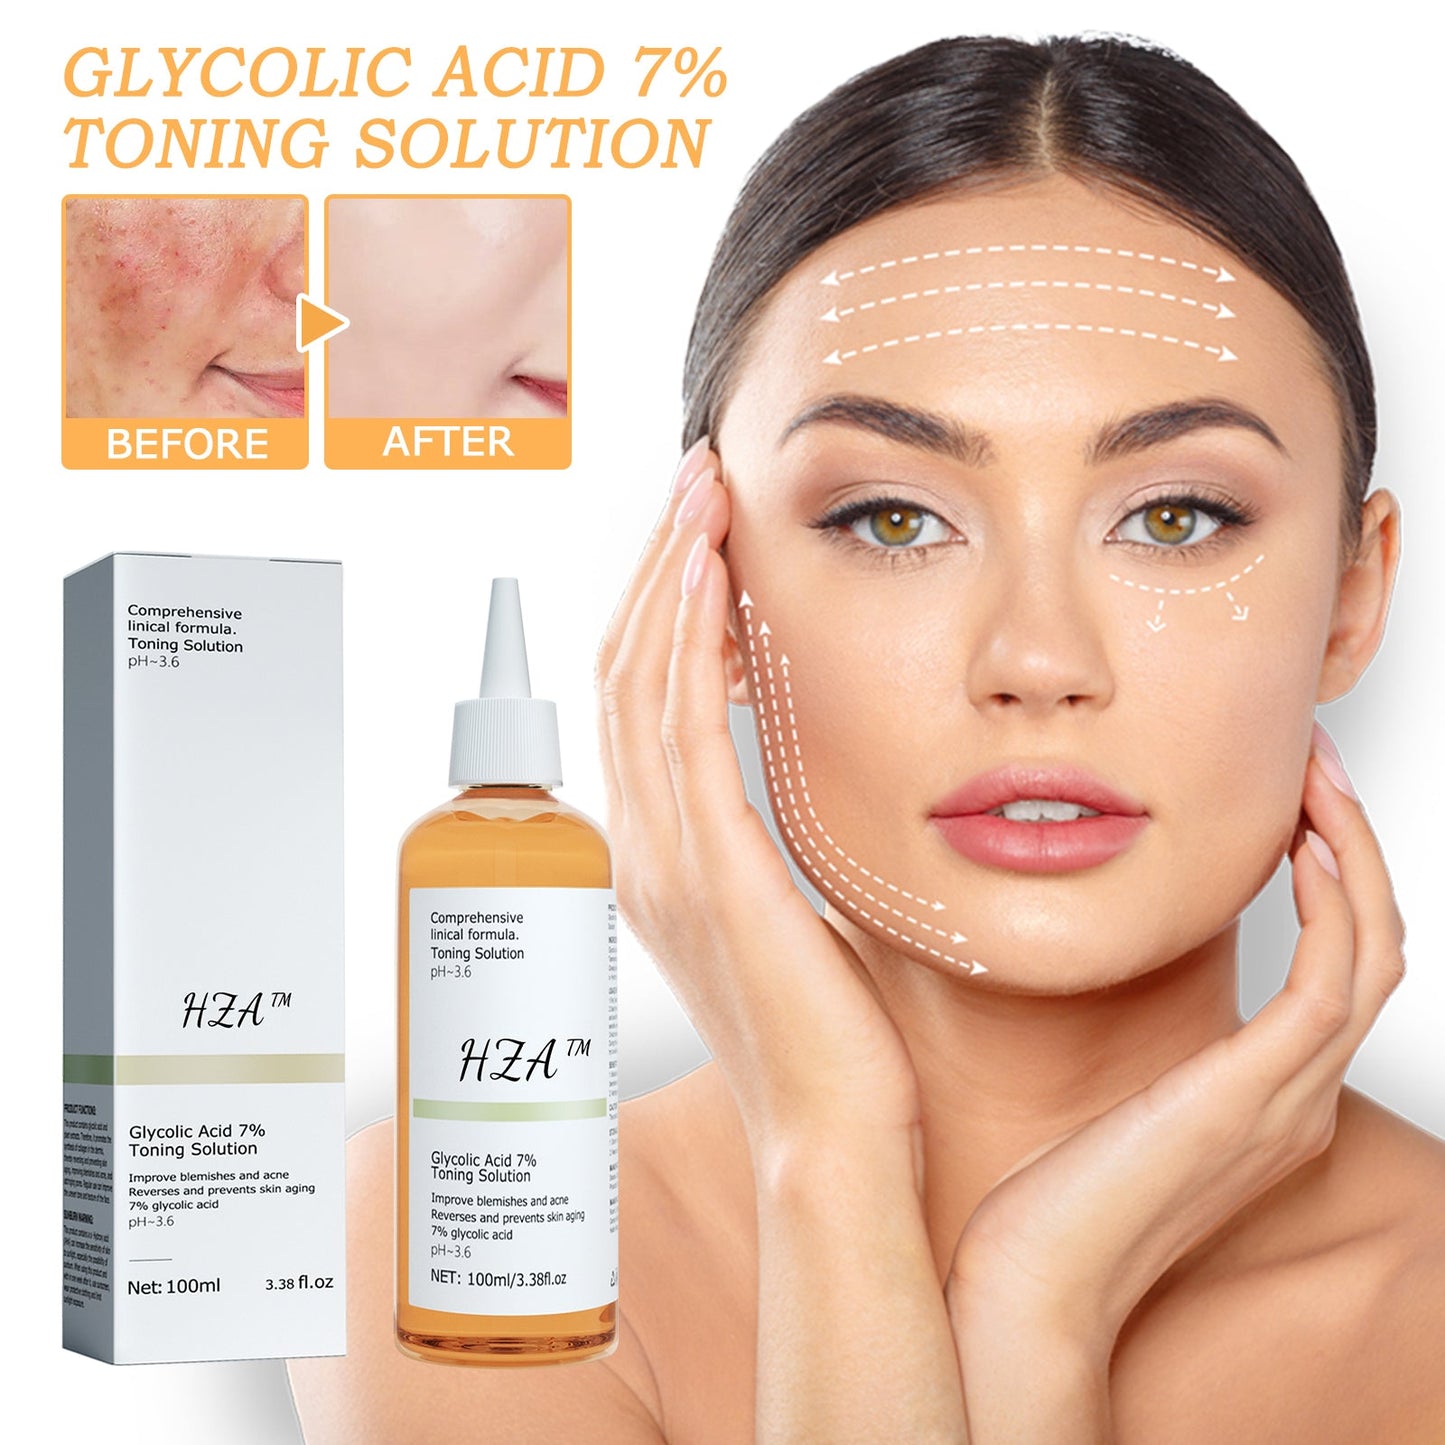 Glycolic Acid 7% Toner: Moisturizes, Smooths Skin, and Fades Acne Scars.